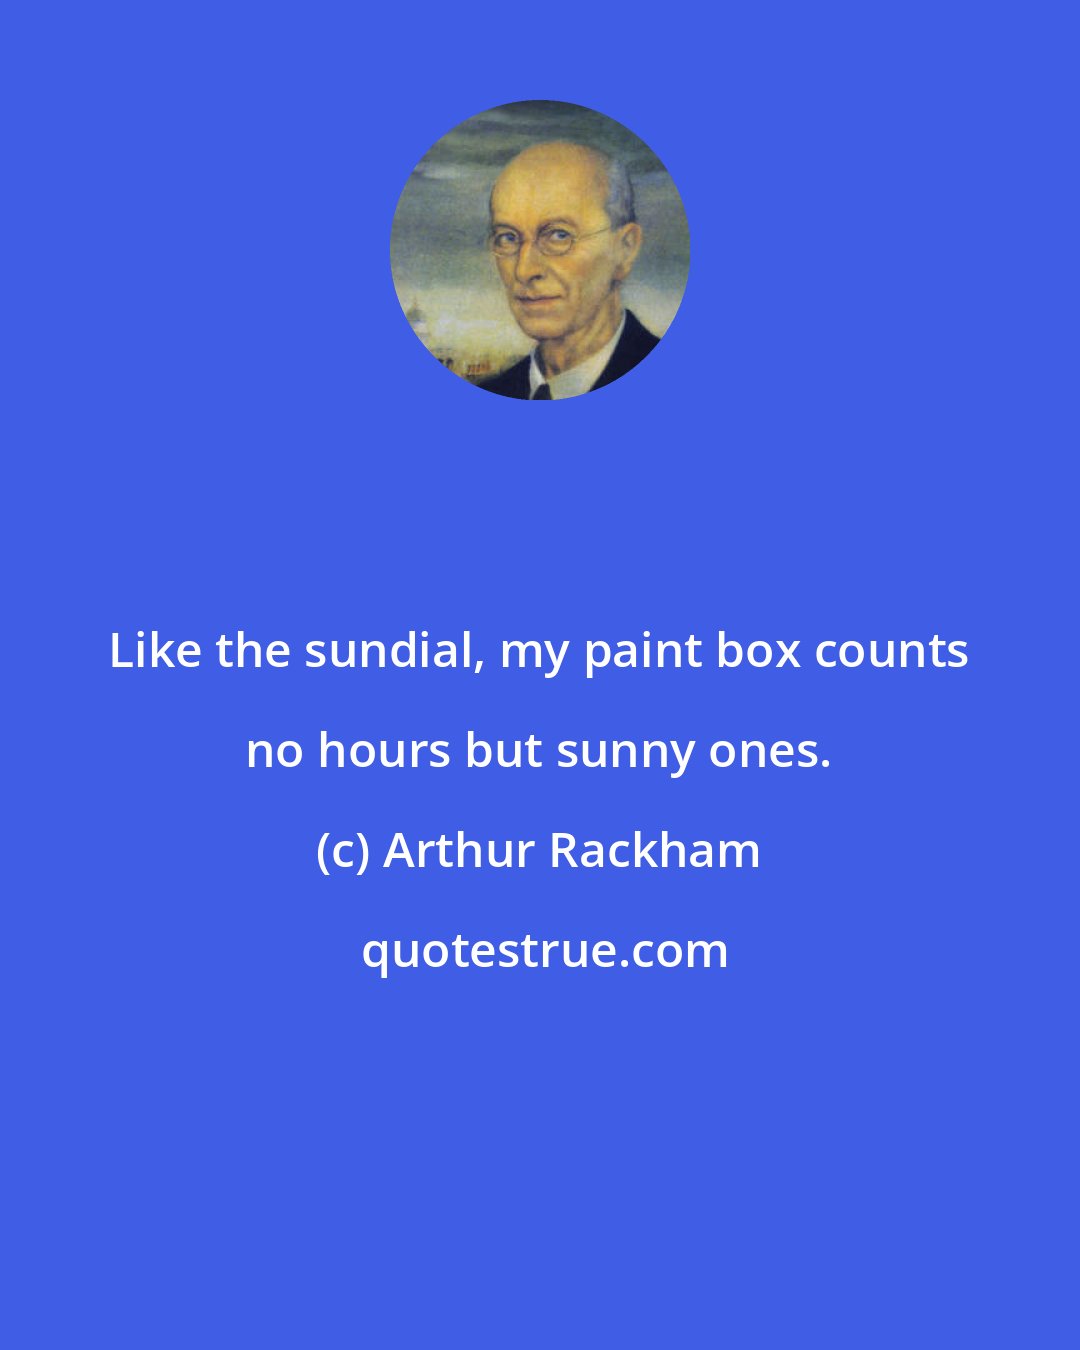 Arthur Rackham: Like the sundial, my paint box counts no hours but sunny ones.